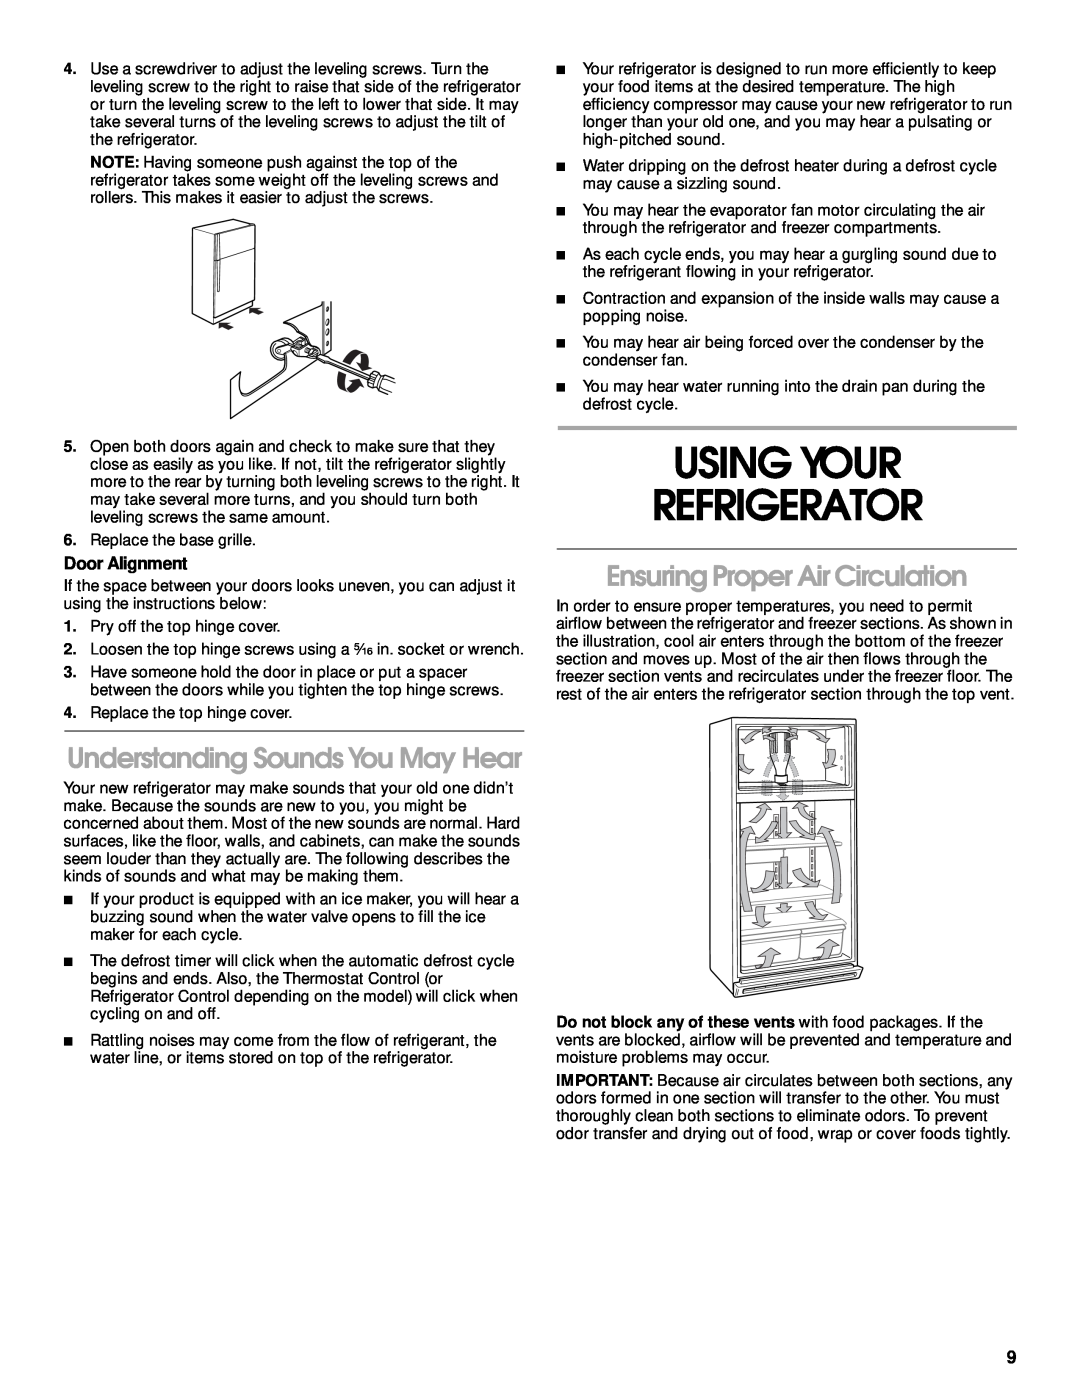 Crosley 2212430 manual Using Your Refrigerator, Understanding Sounds You May Hear, Ensuring Proper Air Circulation 